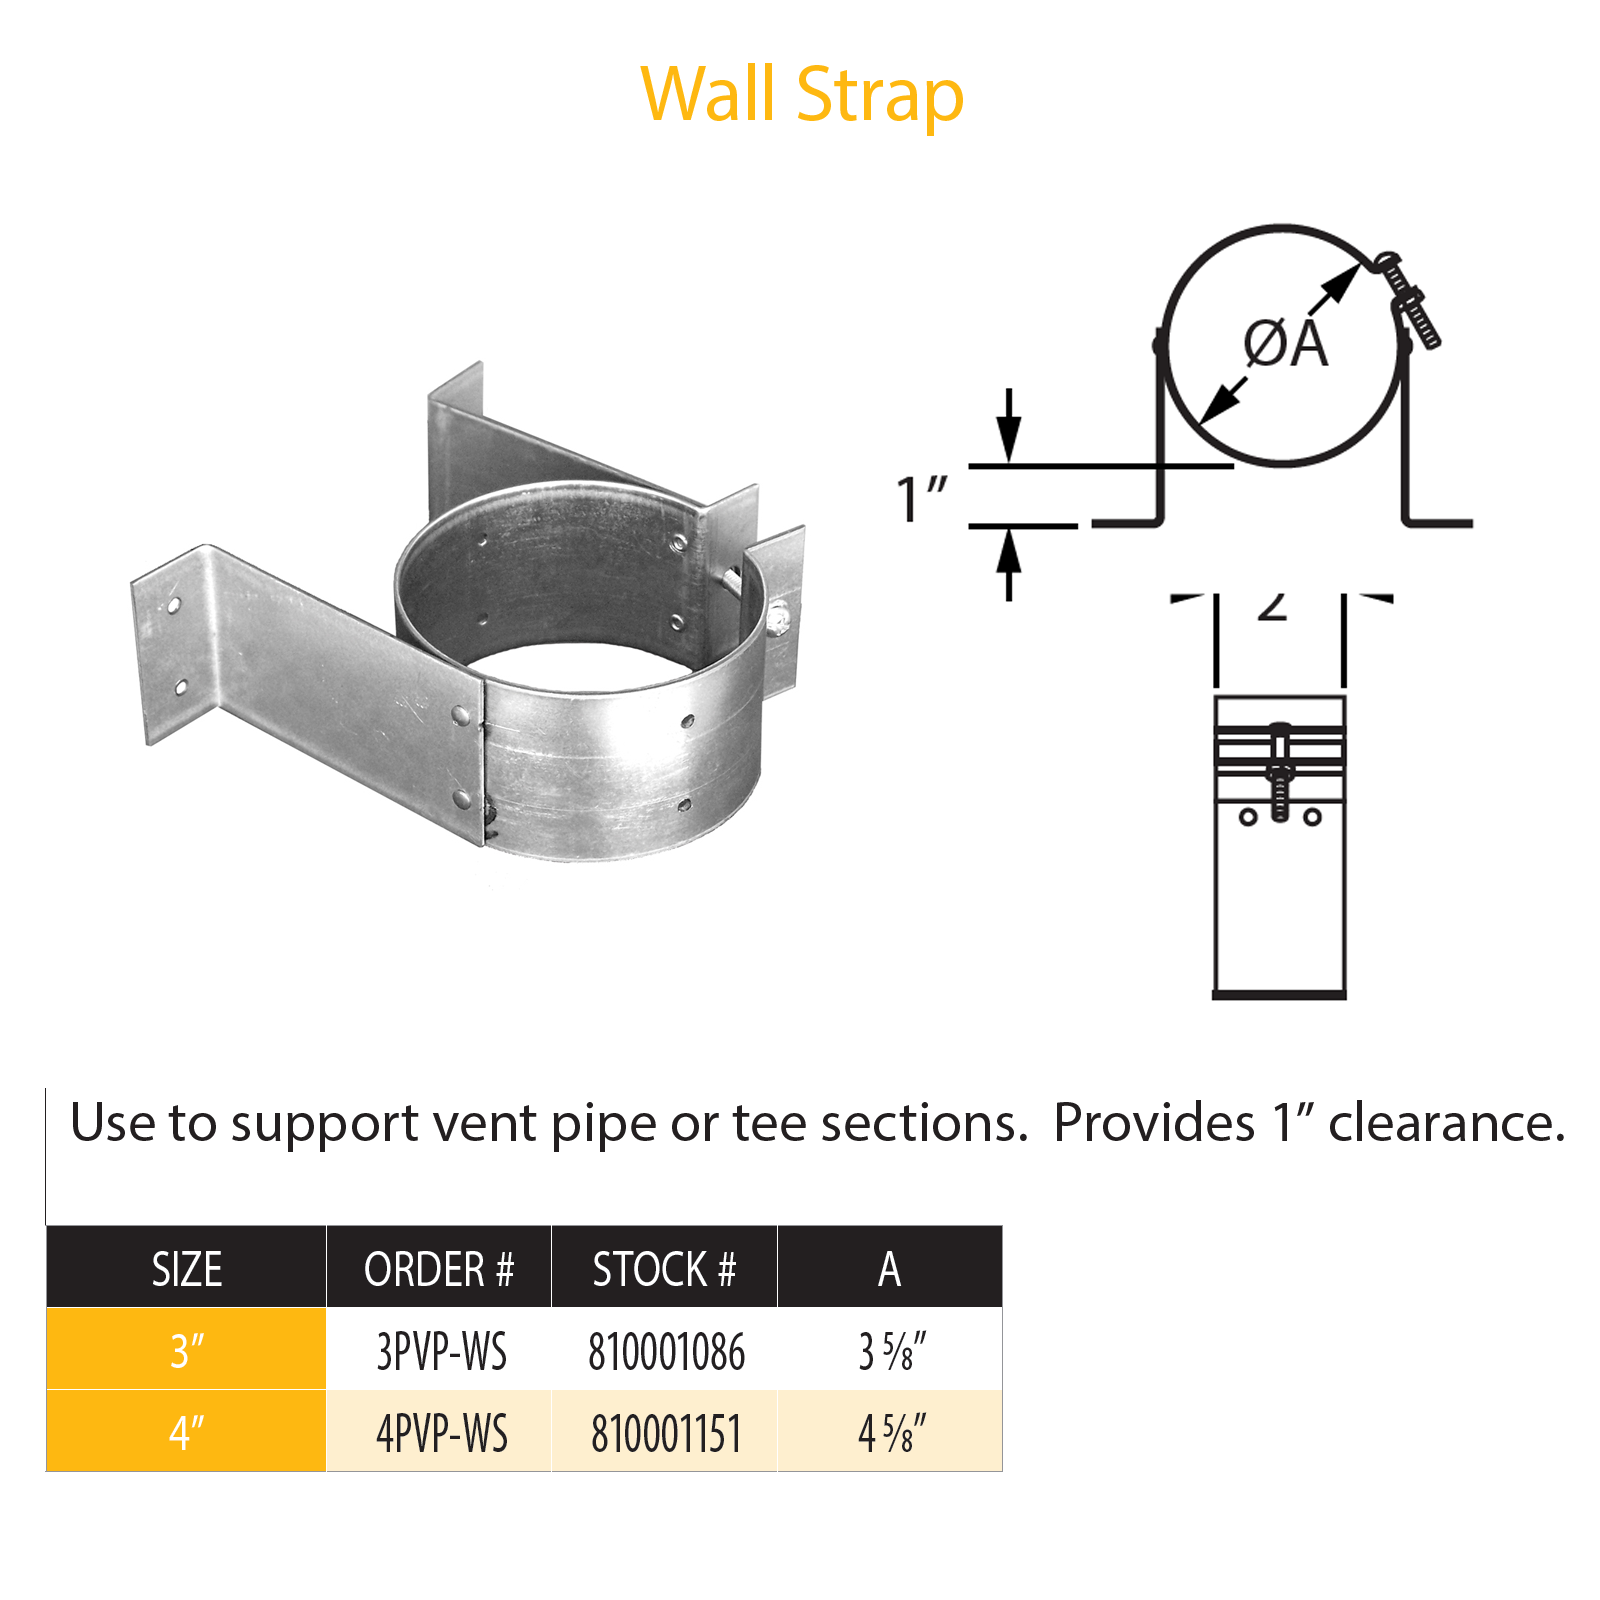 DuraVent Pellet Vent Pro Wall Strap | 4PVP-WS